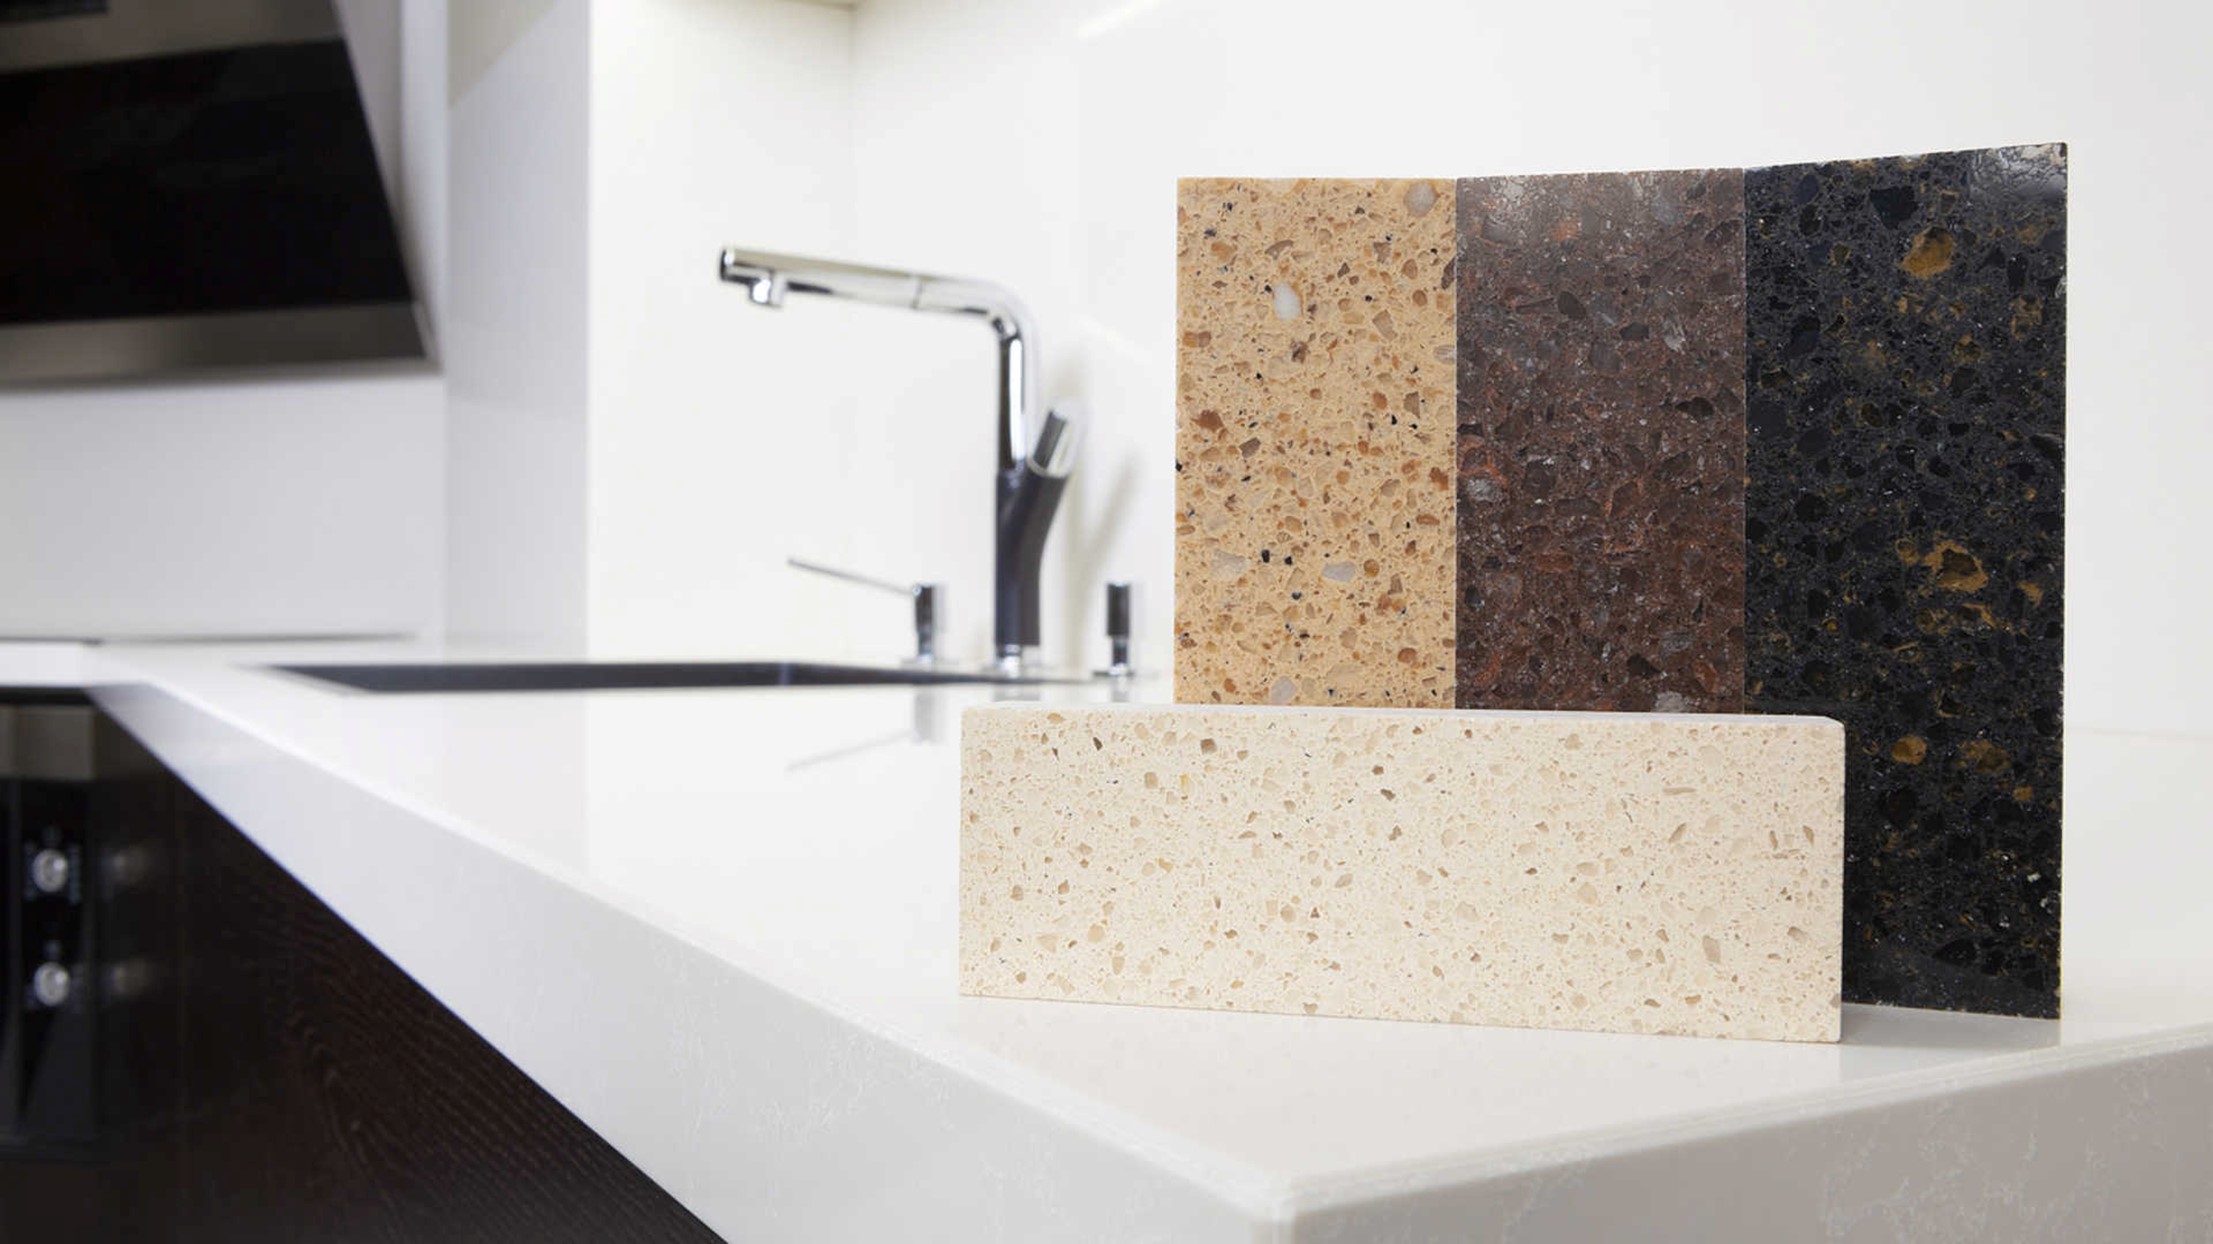 Stone King Samples of marble, quartz, granite for benchtop material comparison